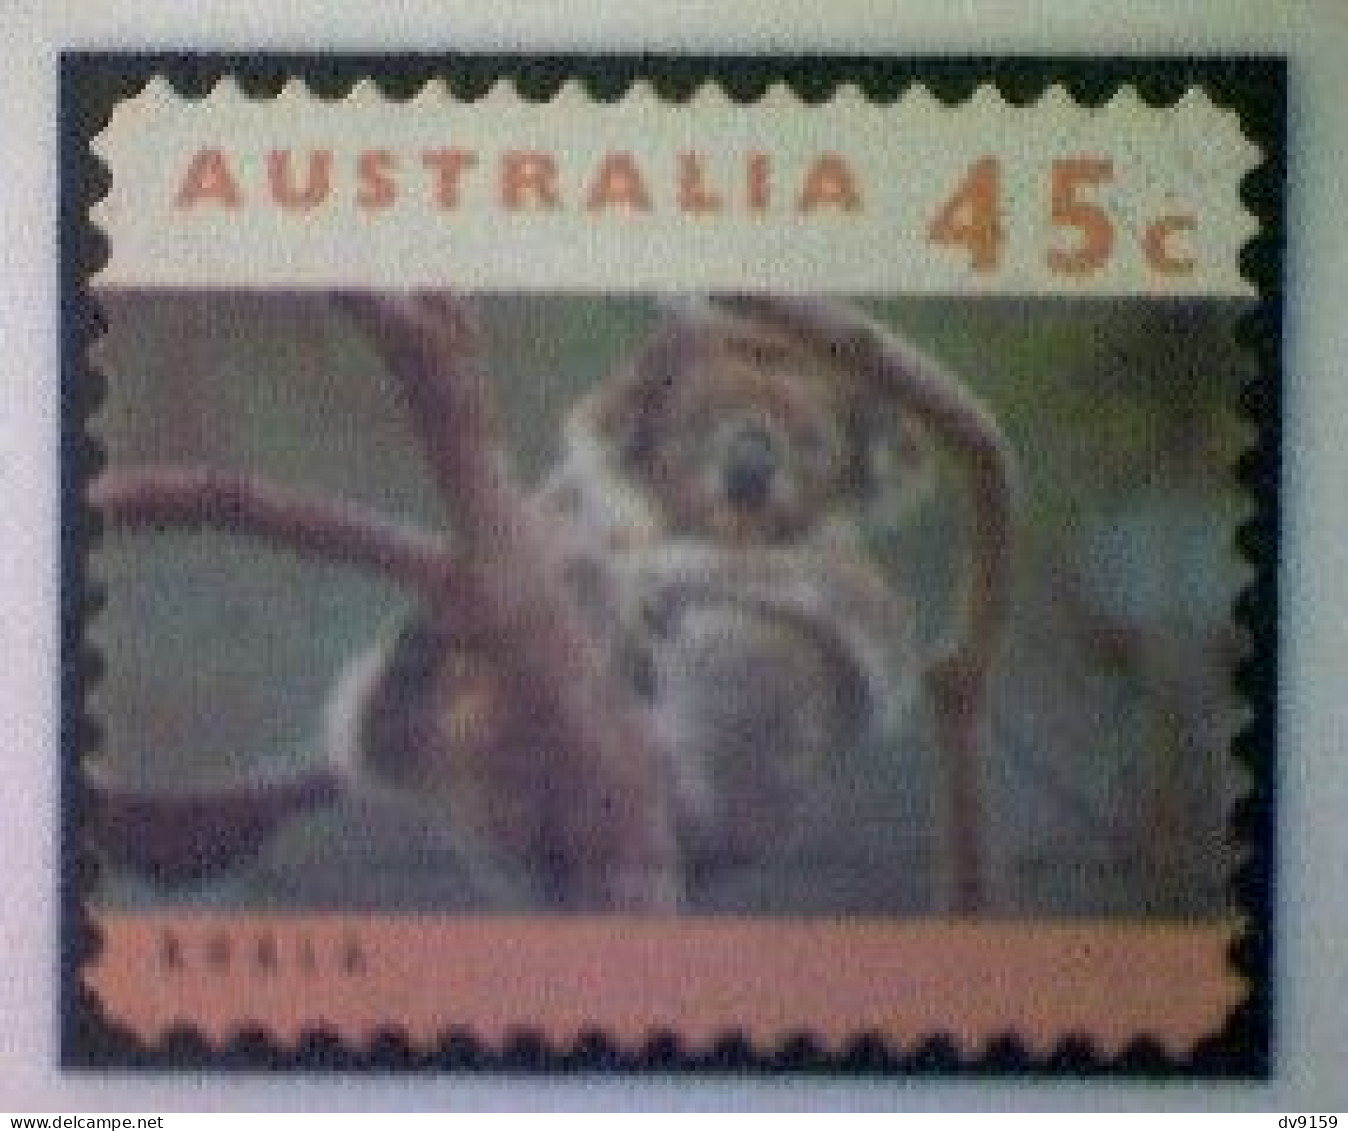 Australia, Scott #1293, Used (o), 1994, Wildlife Series, Koala Sleeping, 45¢, Orange And Multicolored - Gebraucht